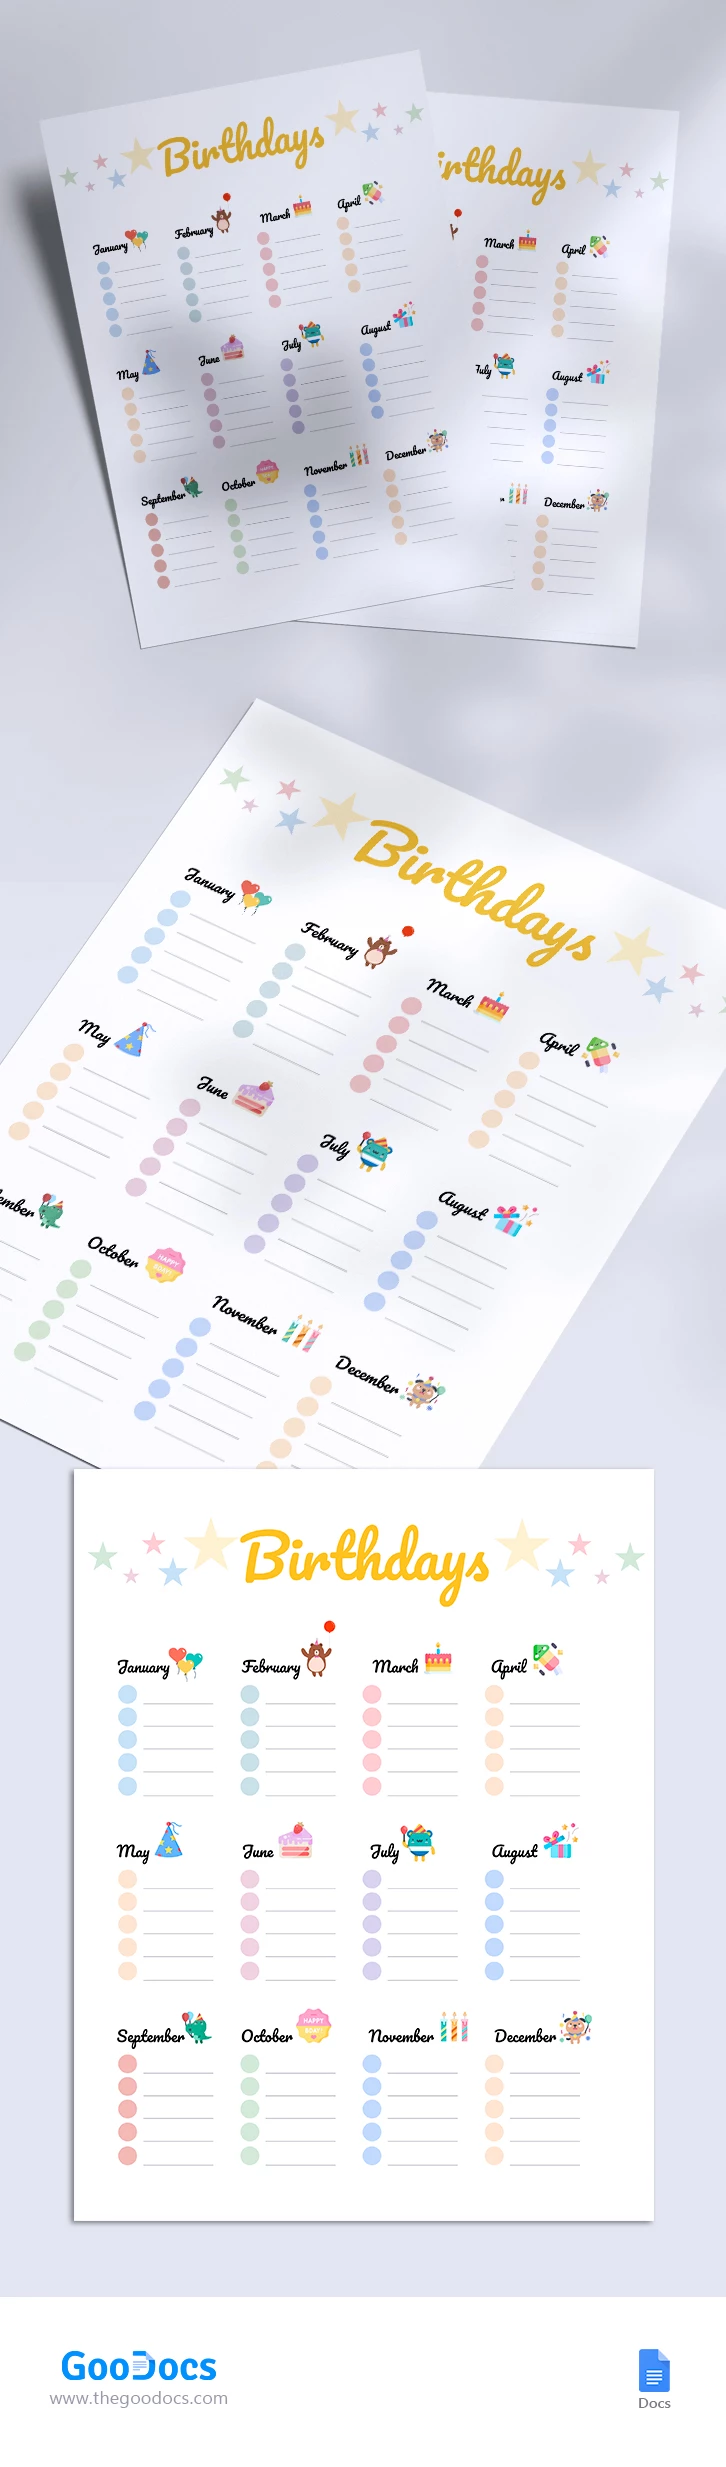 Calendrier d'anniversaires - free Google Docs Template - 10067621